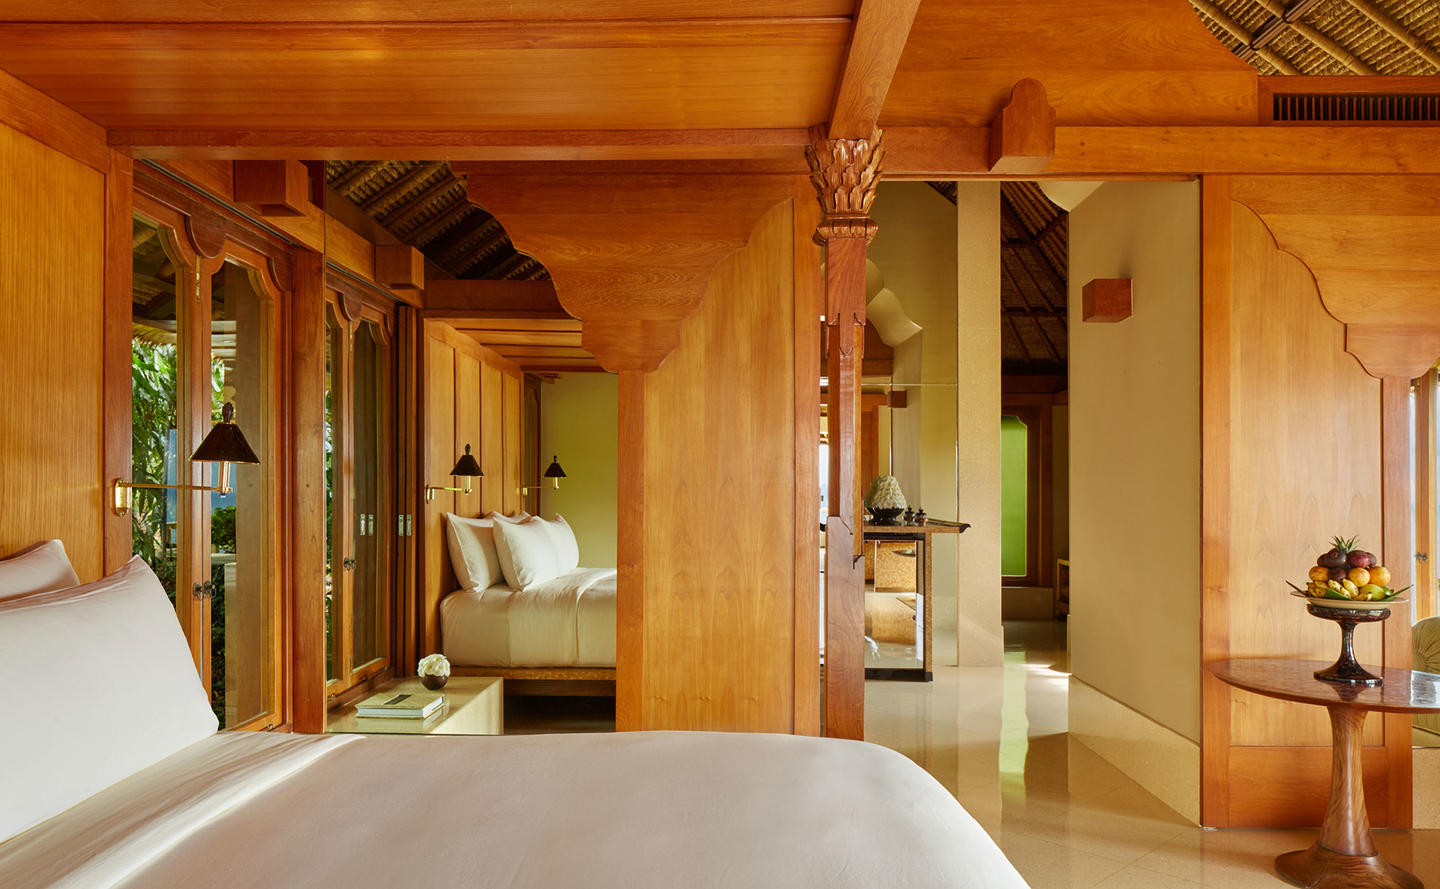 Bedroom, Indrakila Suite - Amankila, Bali, Indonesia